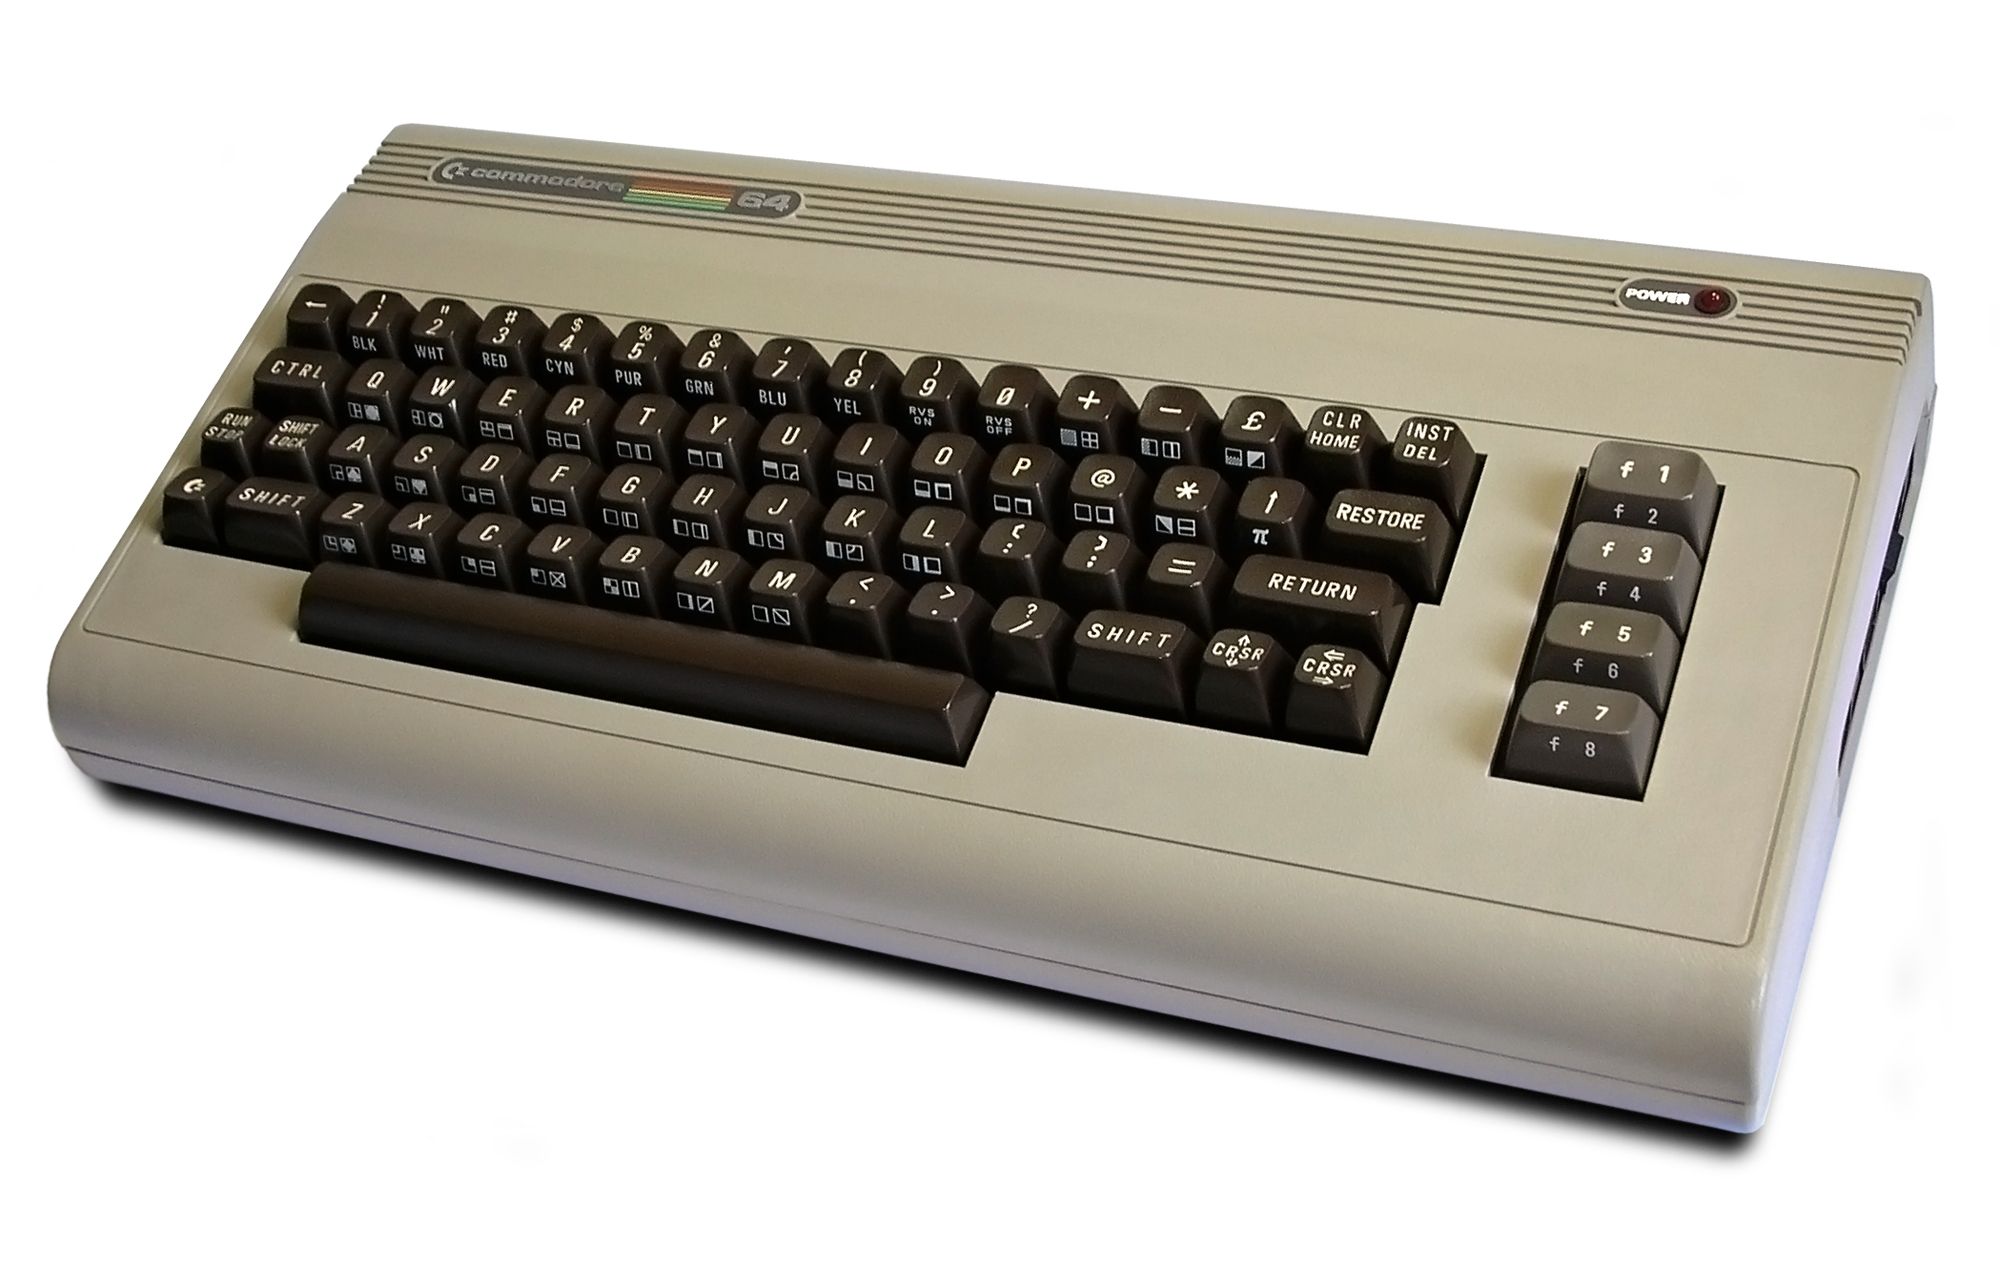 Back2Basics – Resurrecting the Computer Coding of the 1970s/1980s!